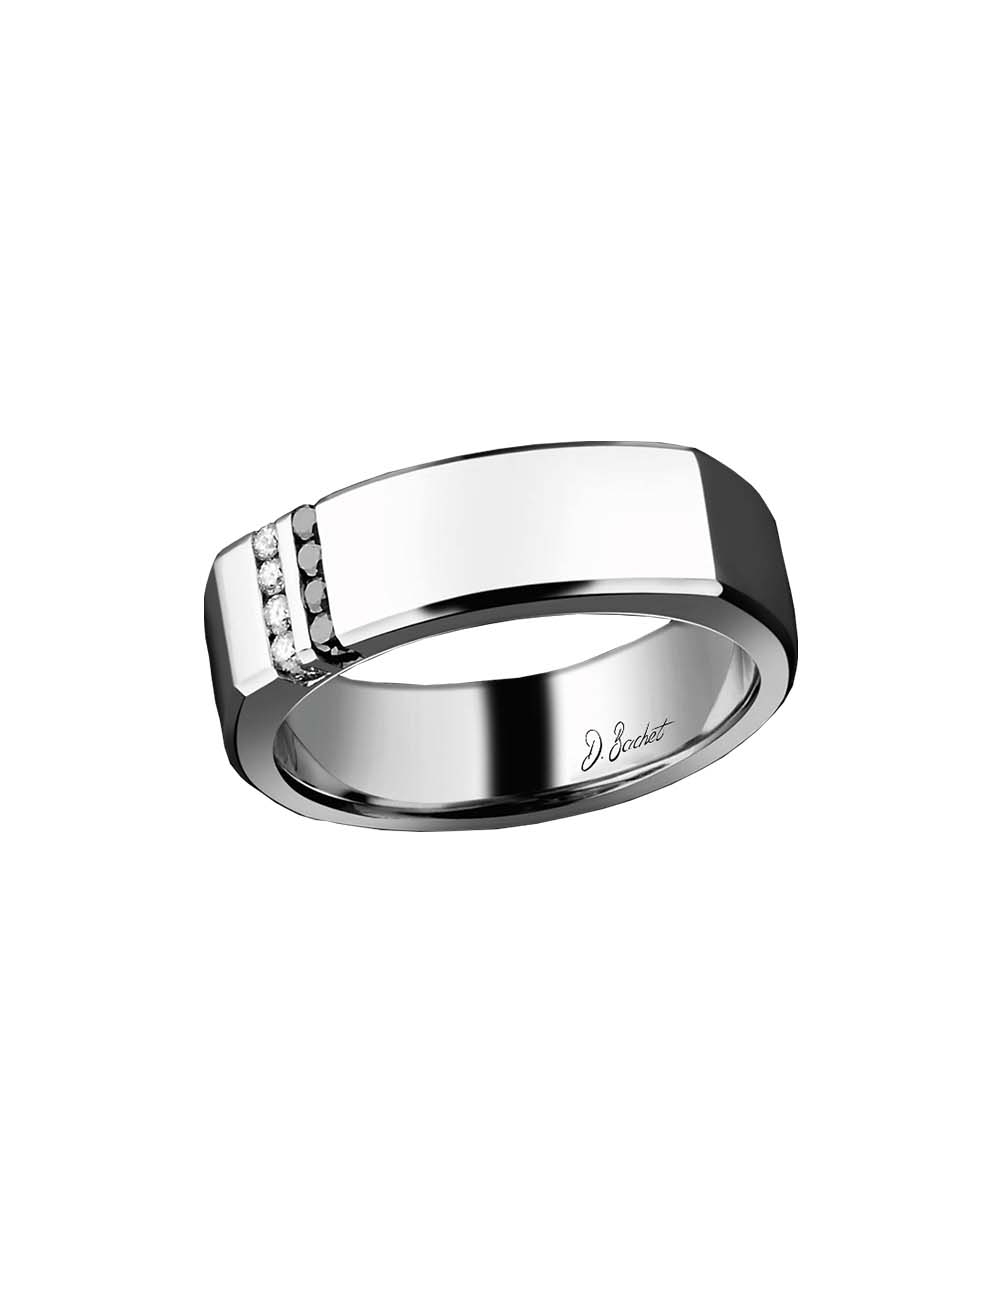 Unique Men's signet ring set with white and black diamonds